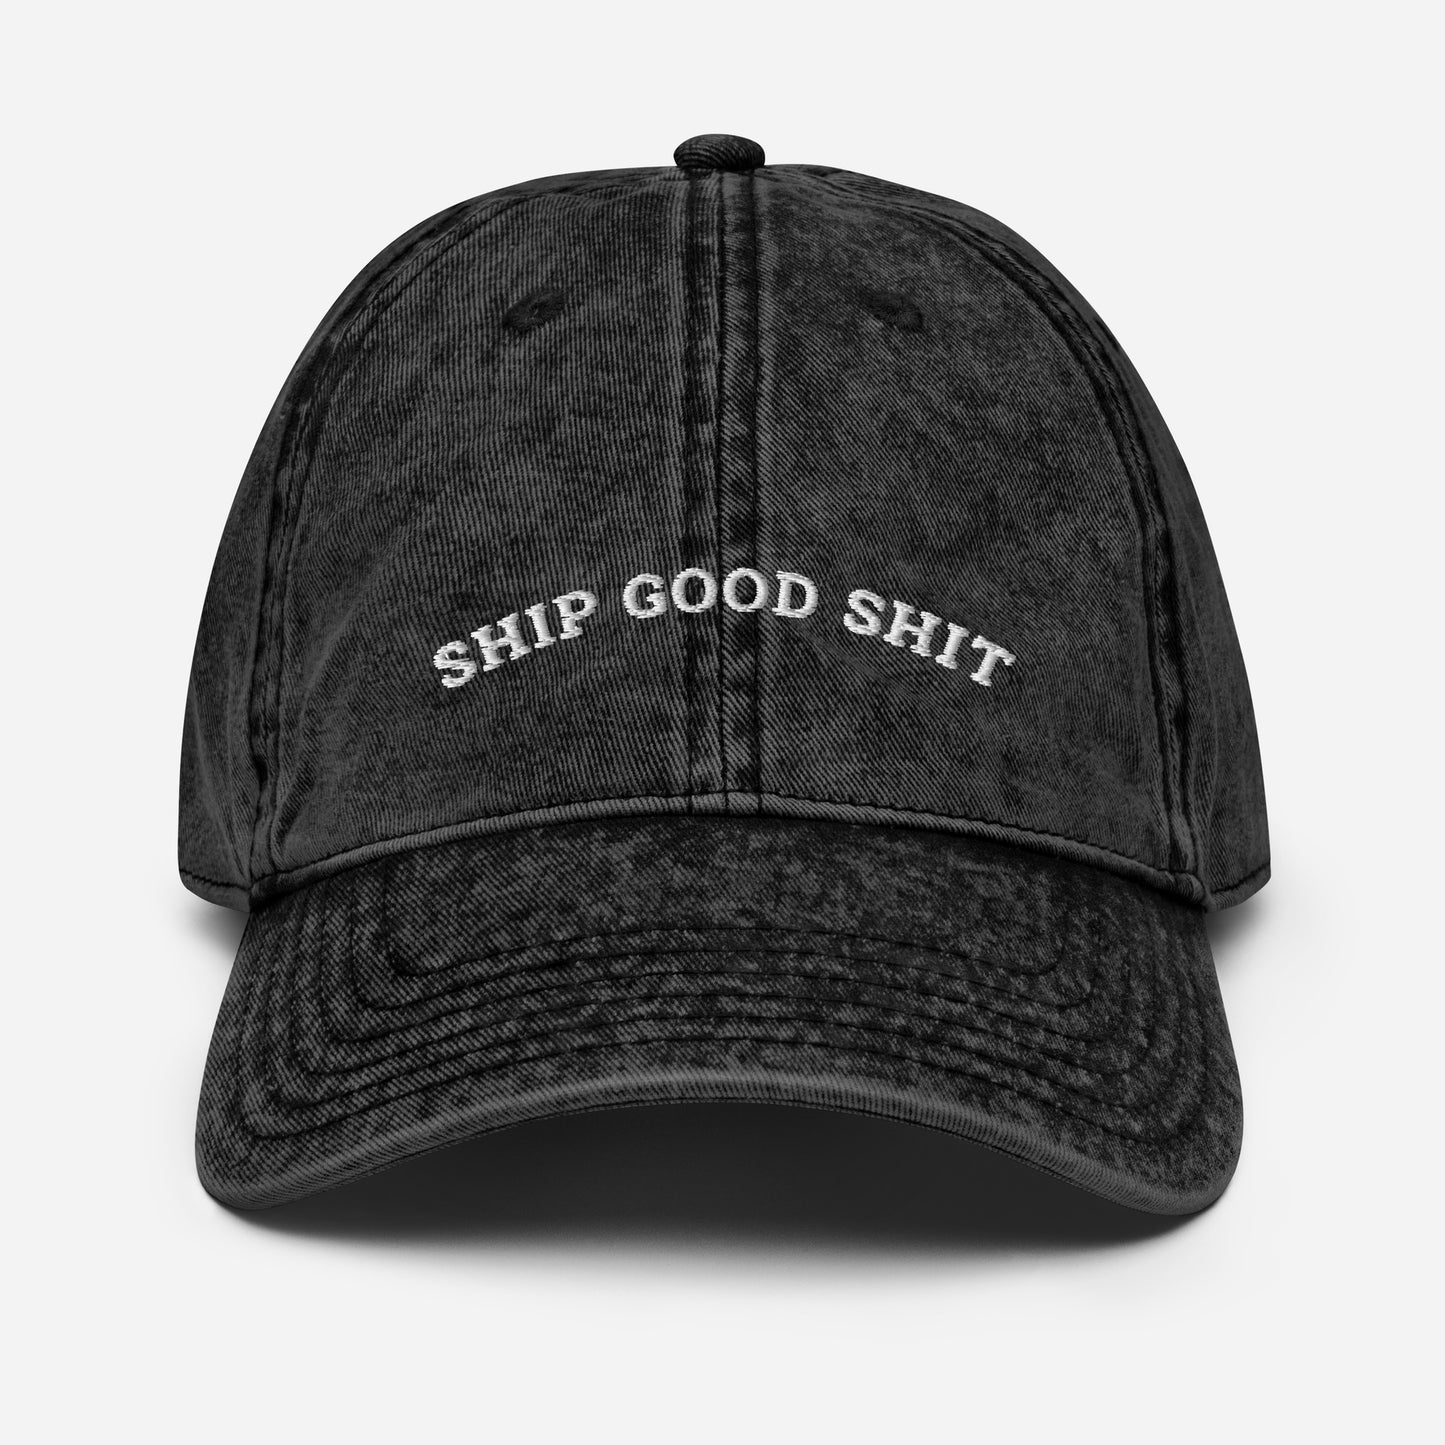 Ship Good Shit Vintage Cotton Twill Cap